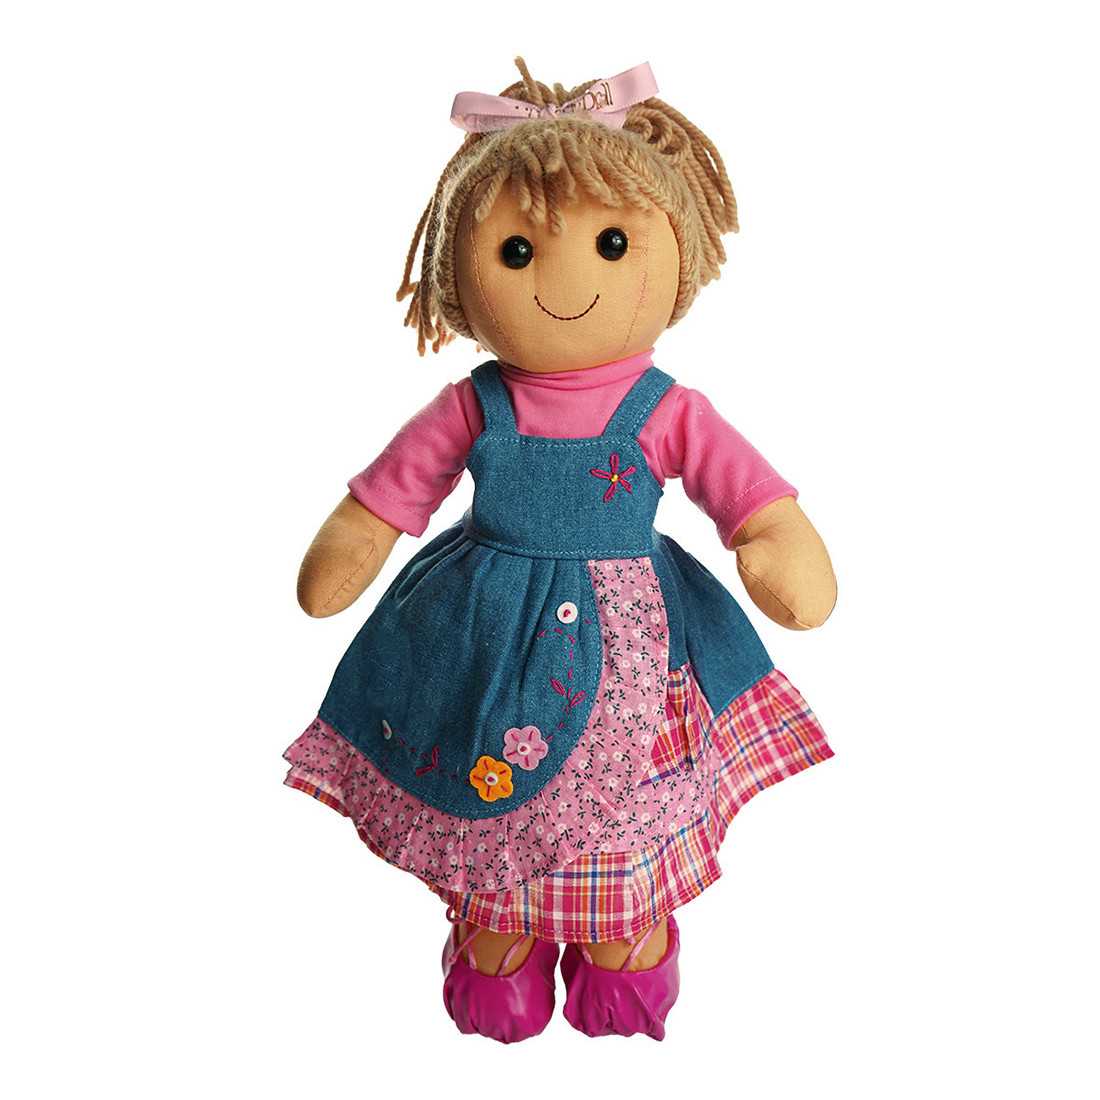 Bambola My Doll Mary Kate Vendita Online € 52 00 Miglior Prezzo